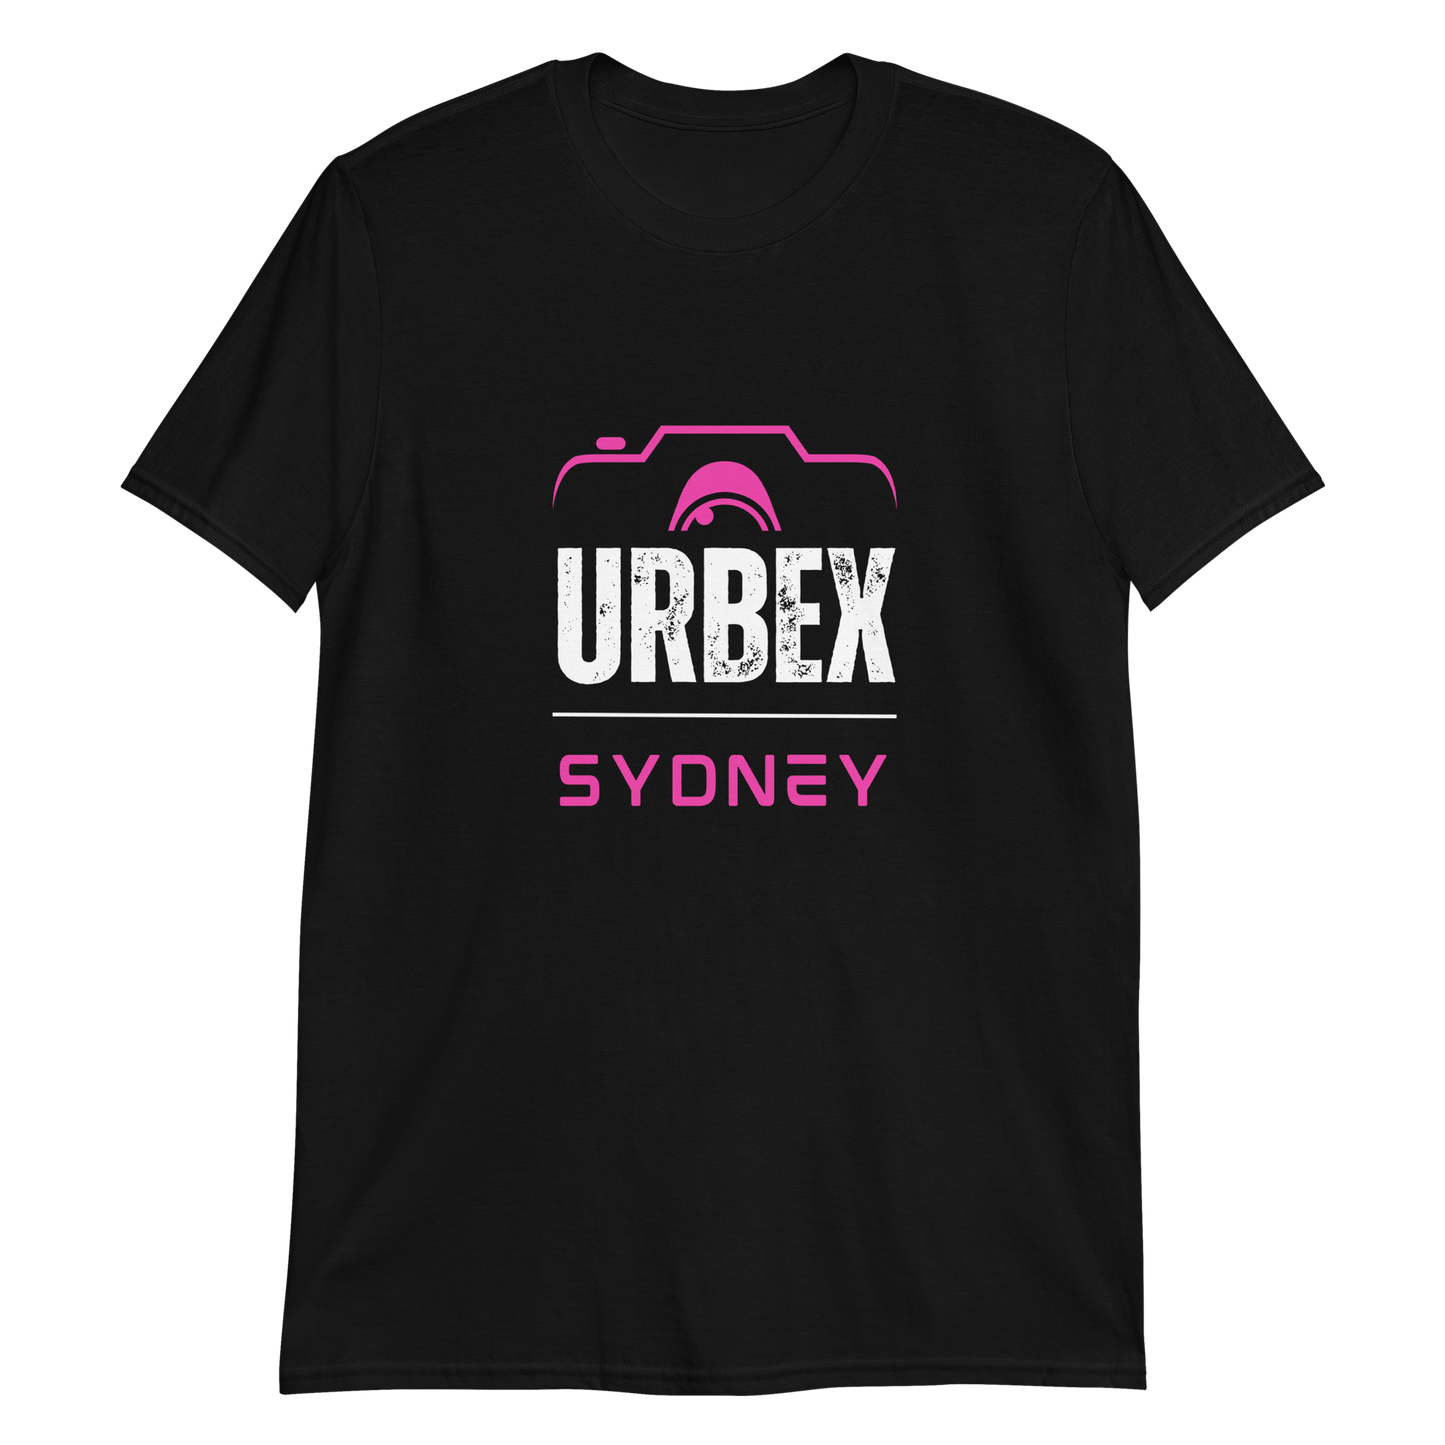 Sydney Urbex Black and Pink T-Shirt Unisex